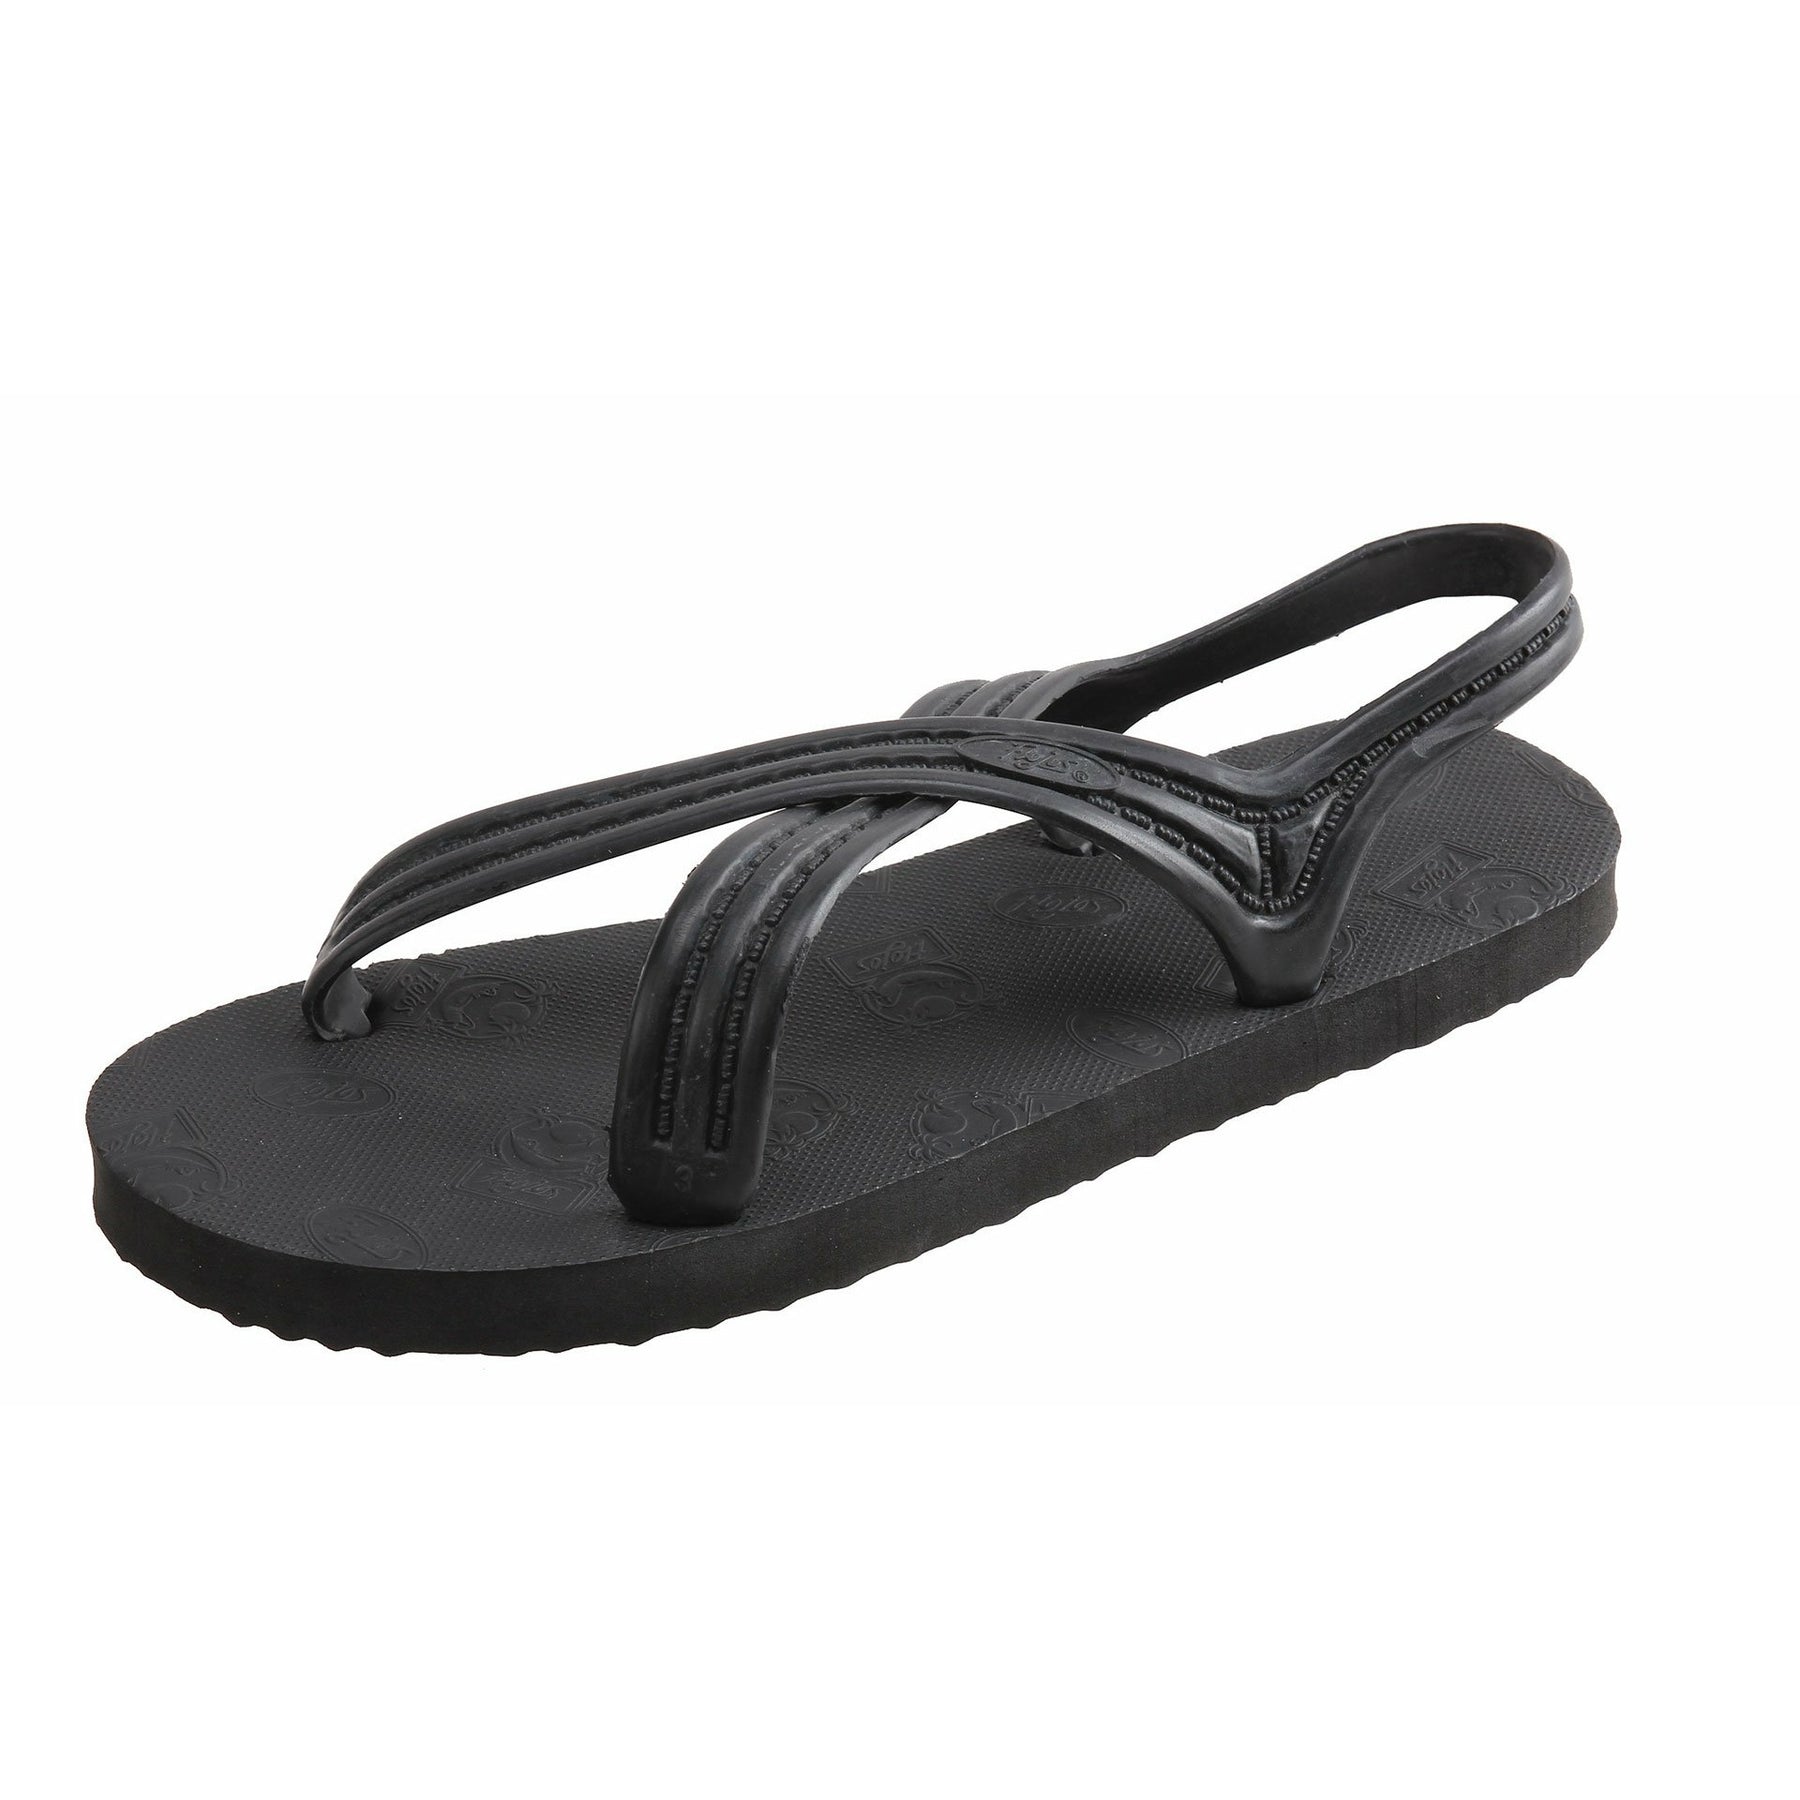 Flojos 101 Flojo (Original) Sandal - Criss Cross Water Friendly Sandal